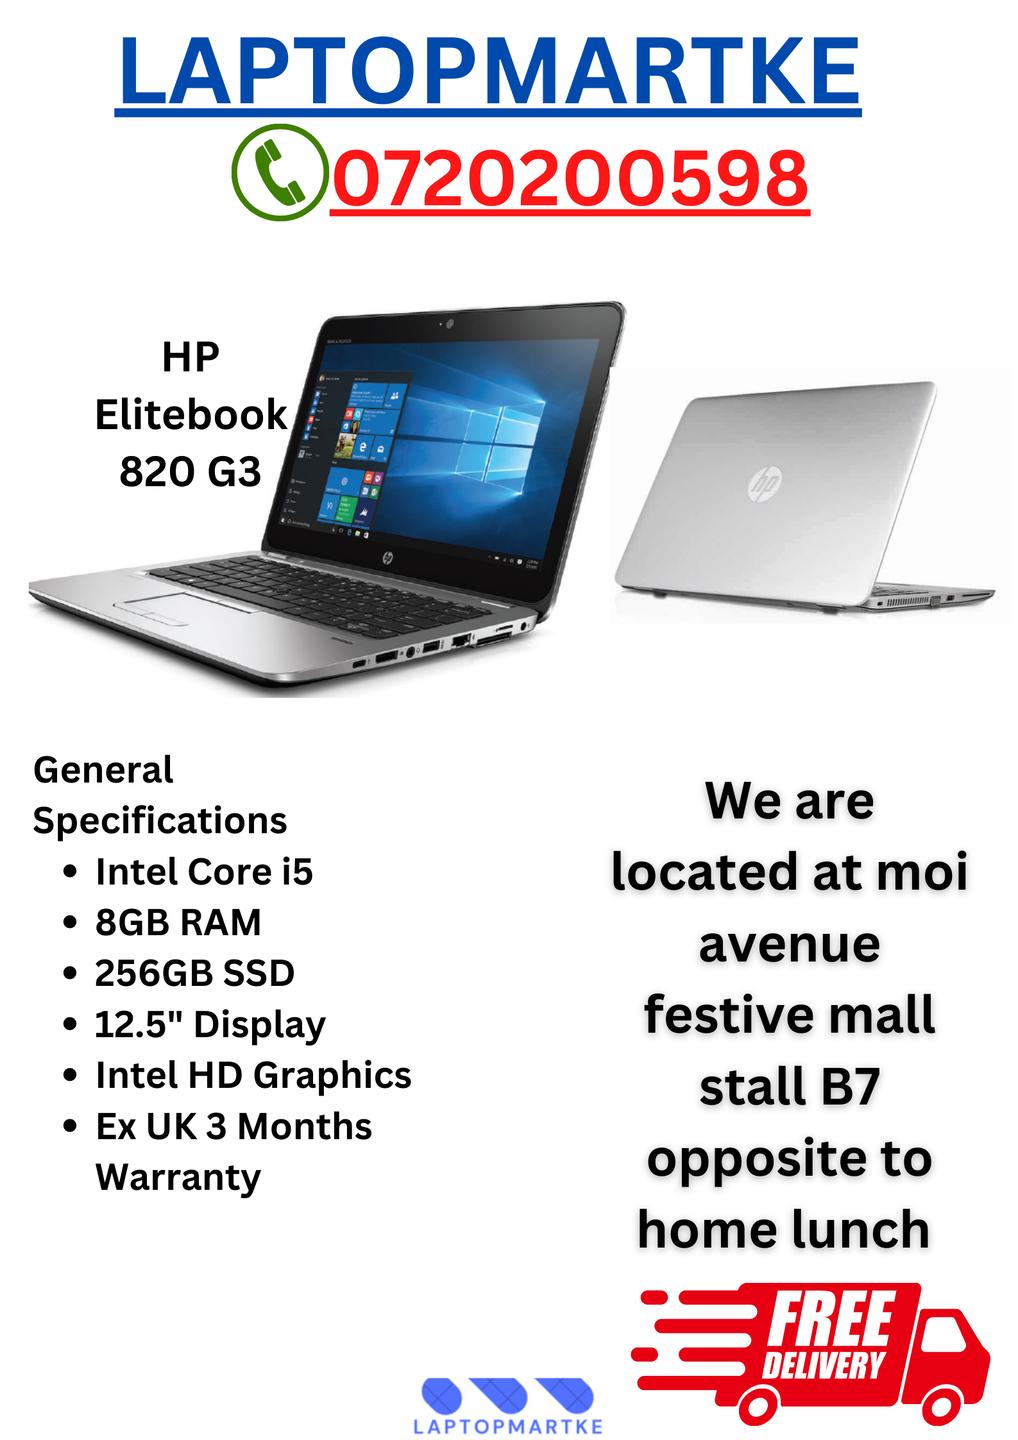 HP EliteBook 840 G3 Notebook PC Specifications